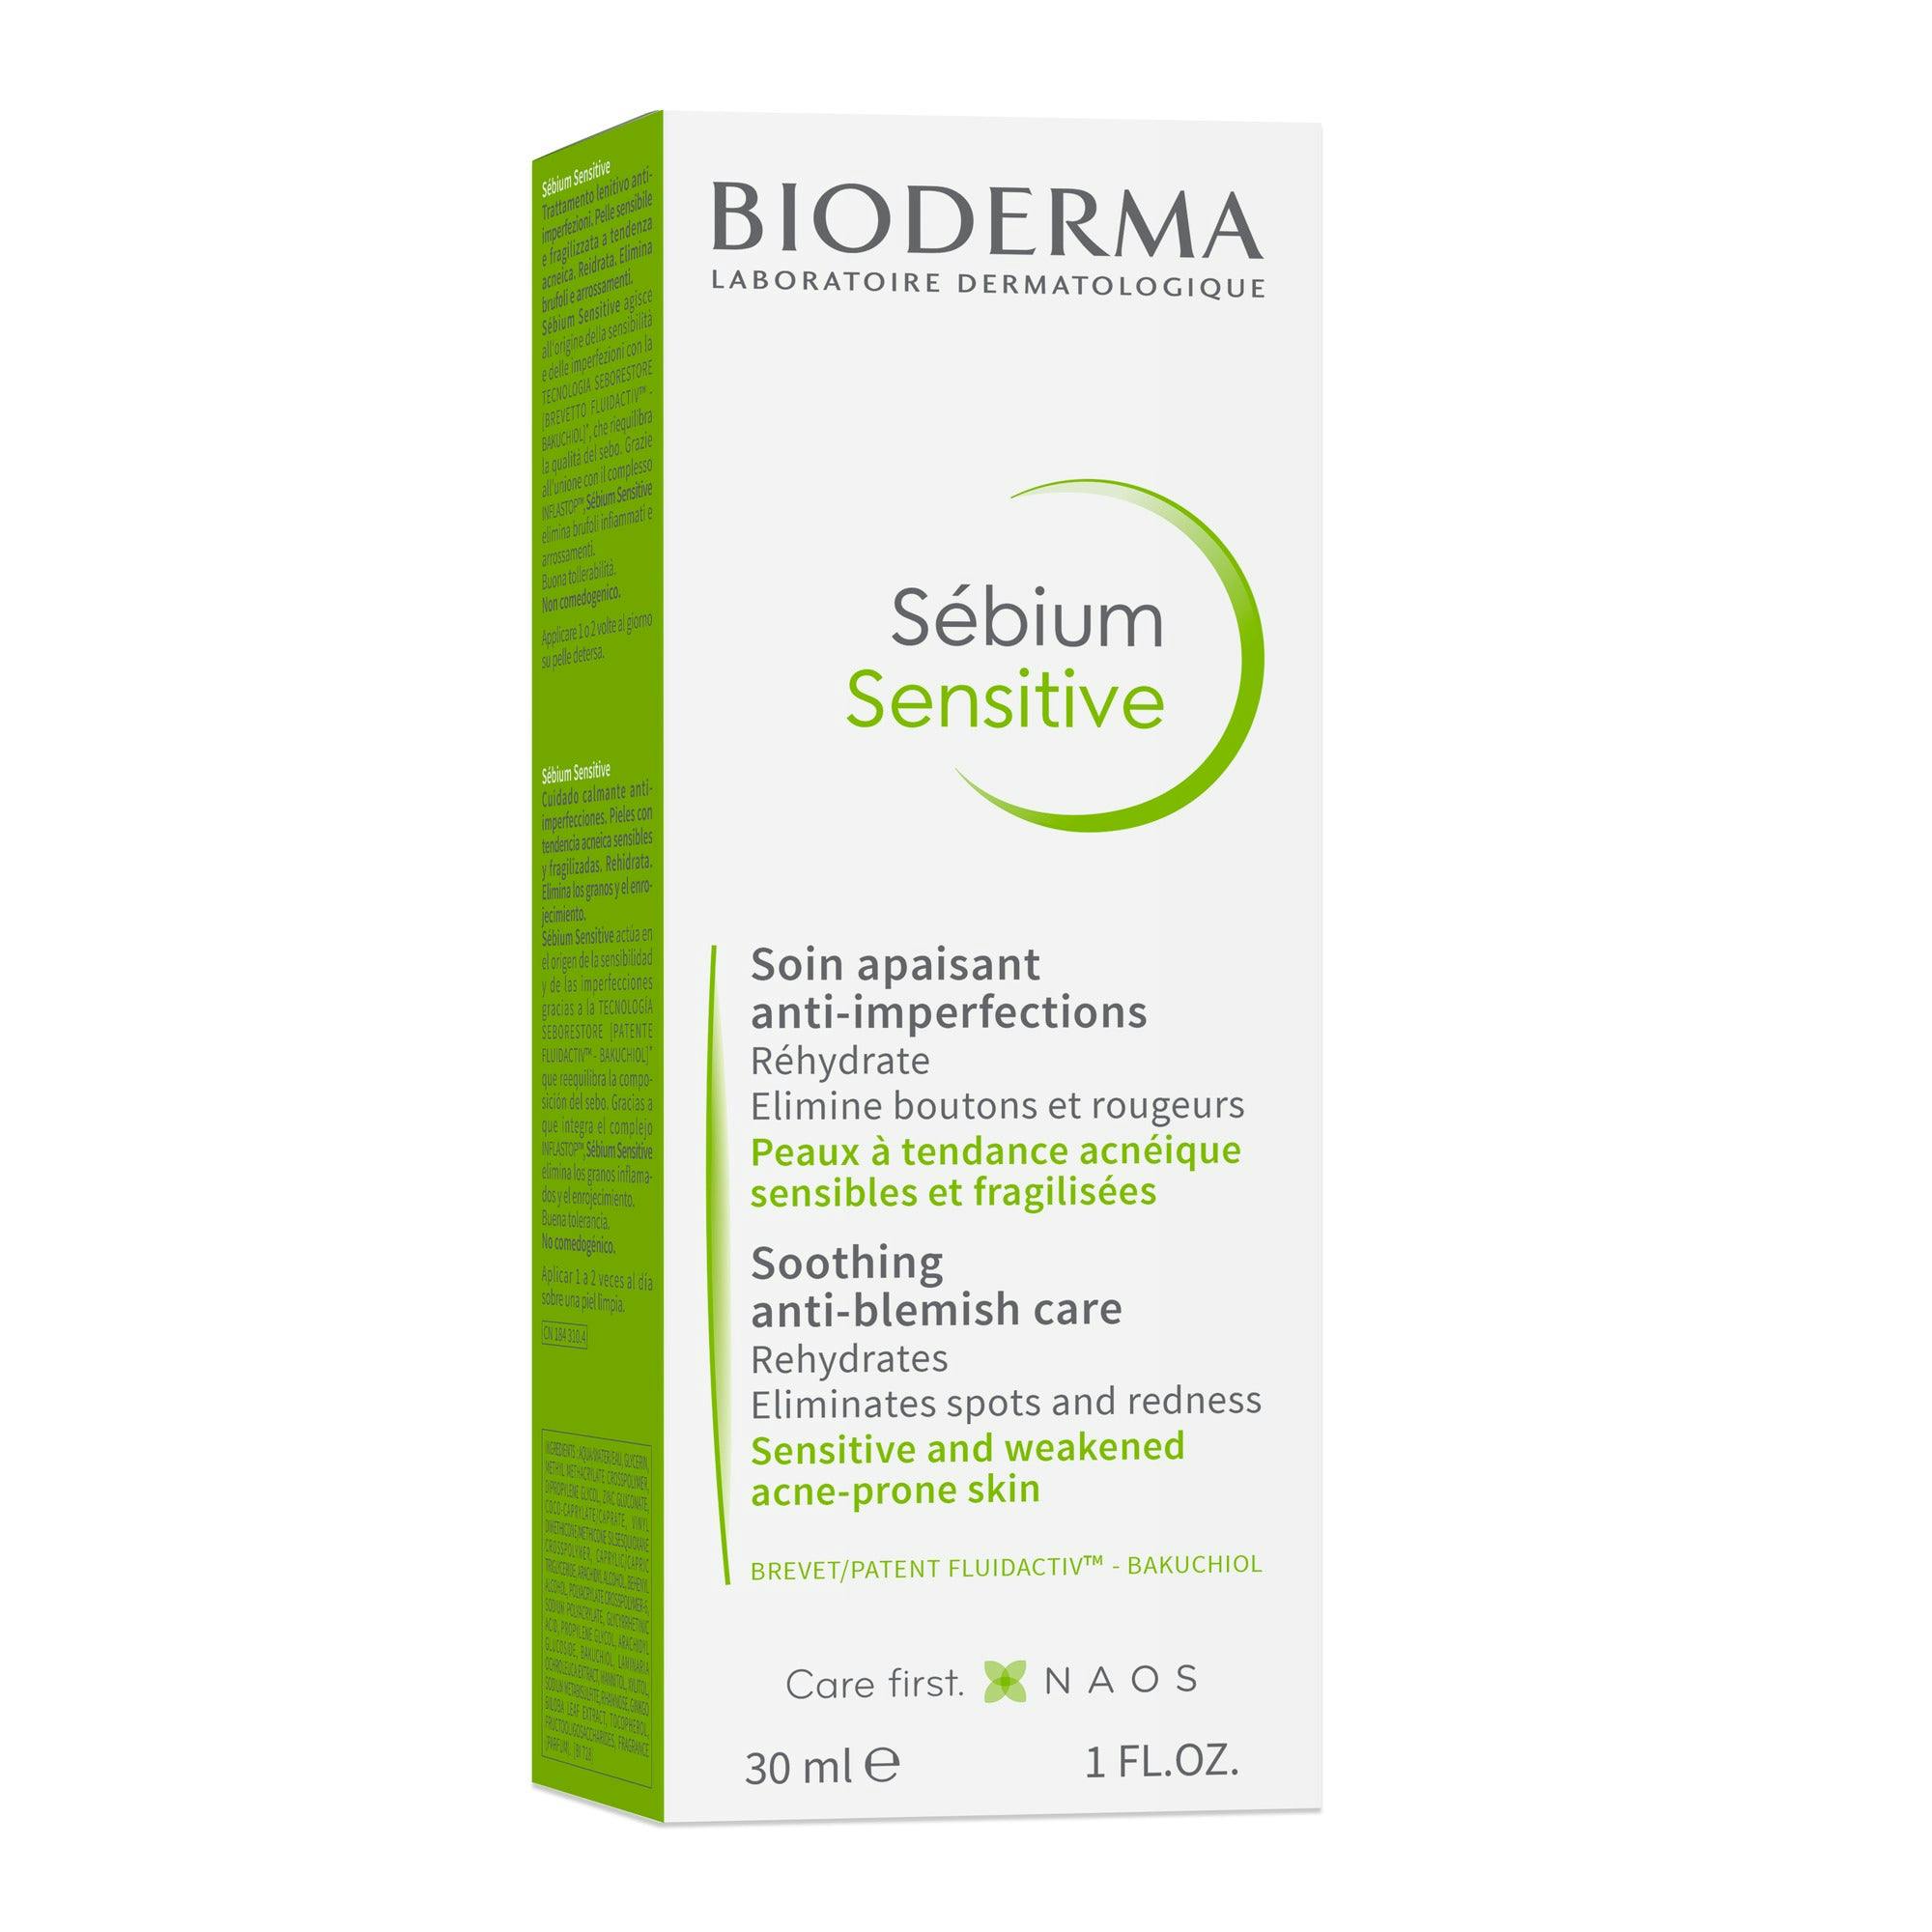 Bioderma Sébium Sensitive Soothing Anti-acne Face Moisturiser suitable for Acne Prone Skin 30ml